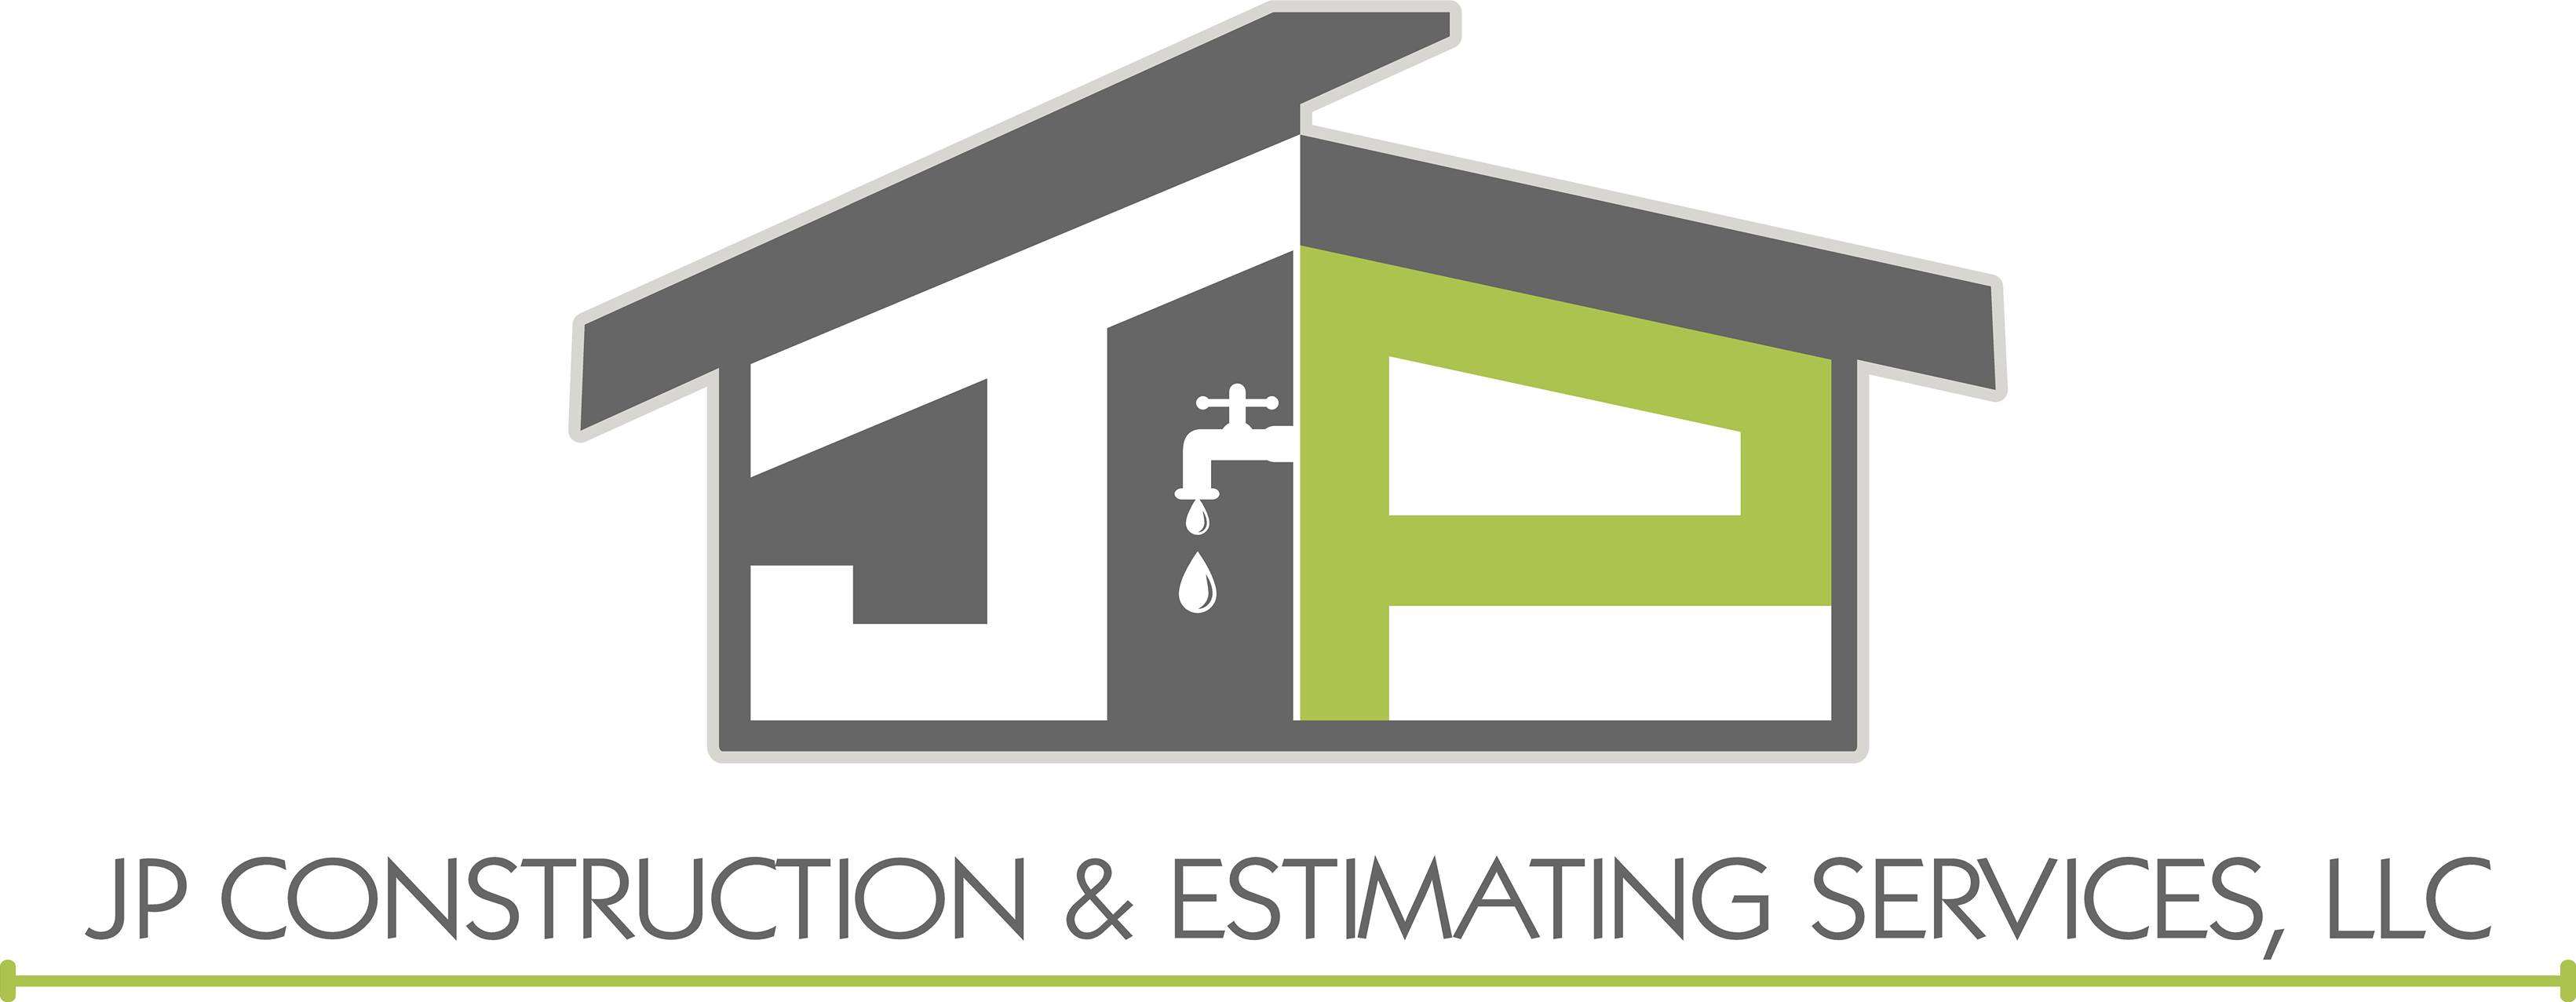 JP Construction & Estimating Services LLC Logo